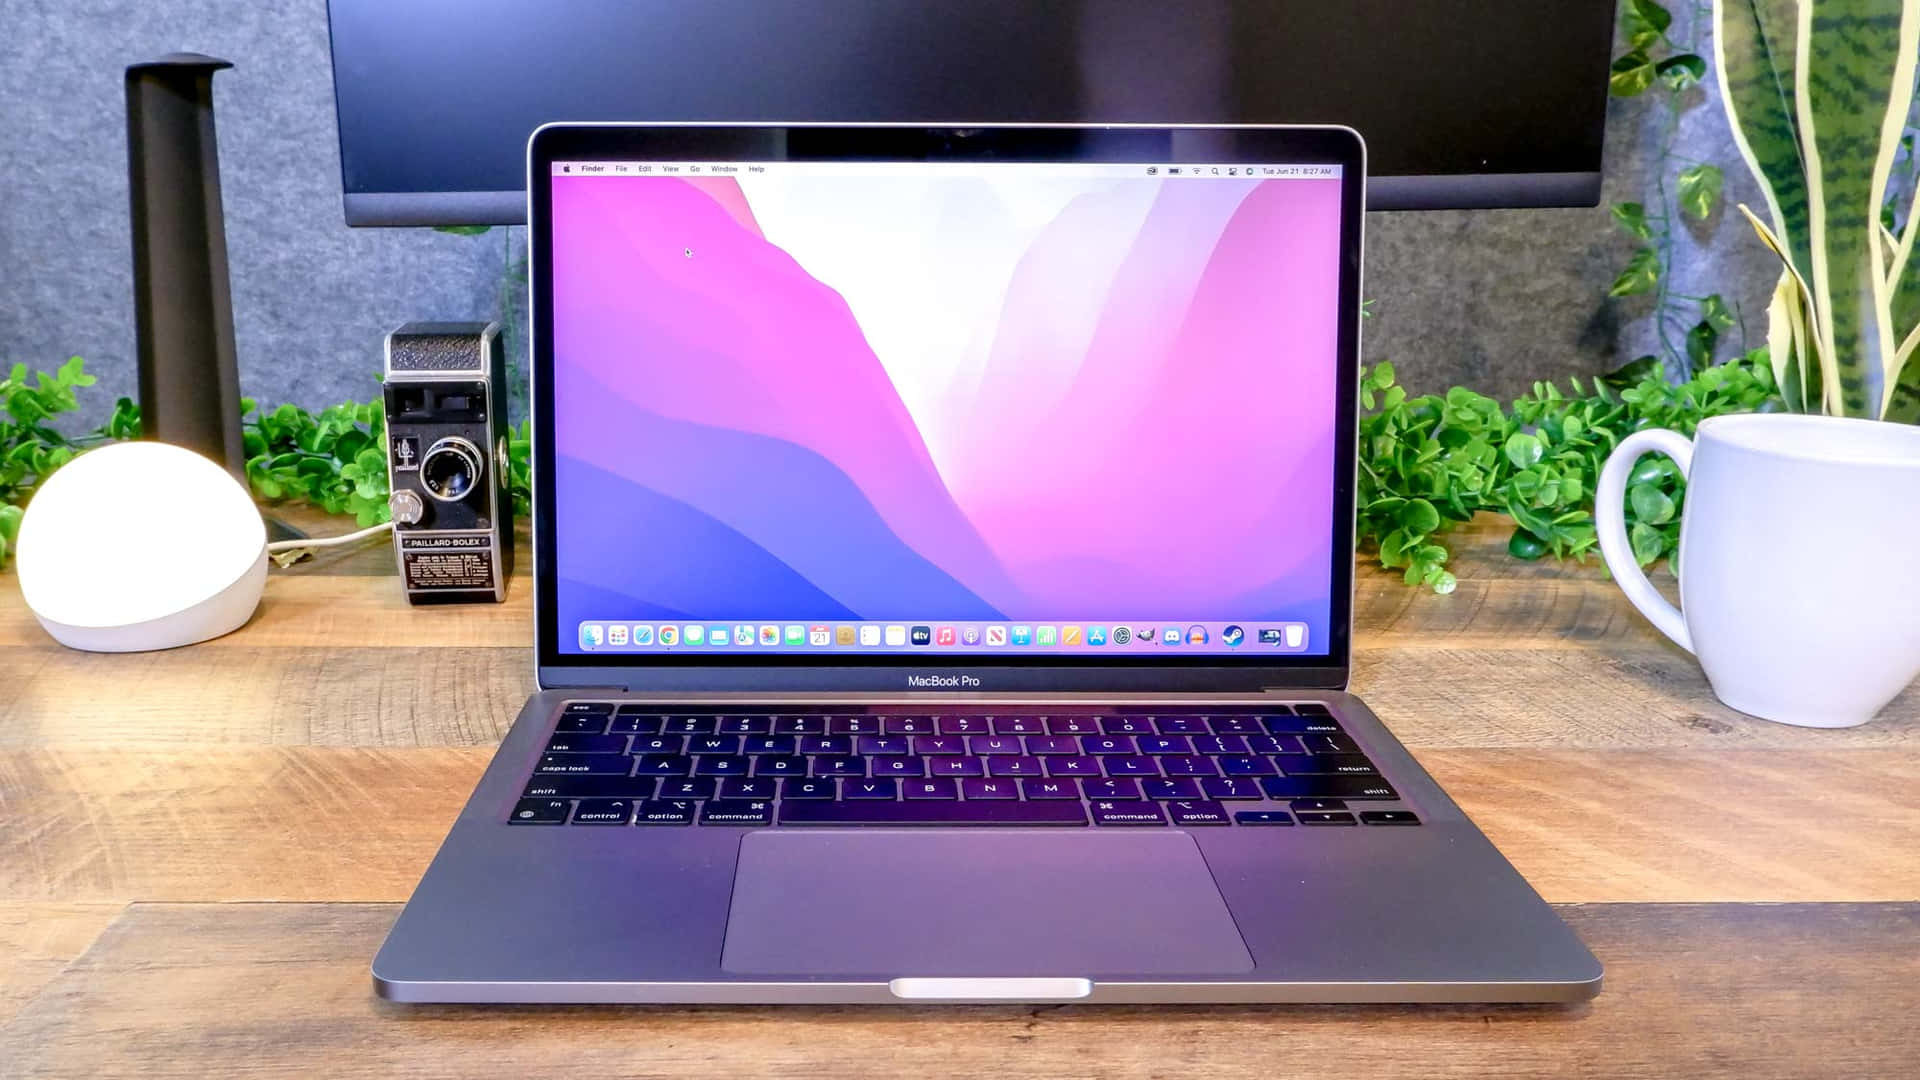 Macbook laptop with sleek and modern design